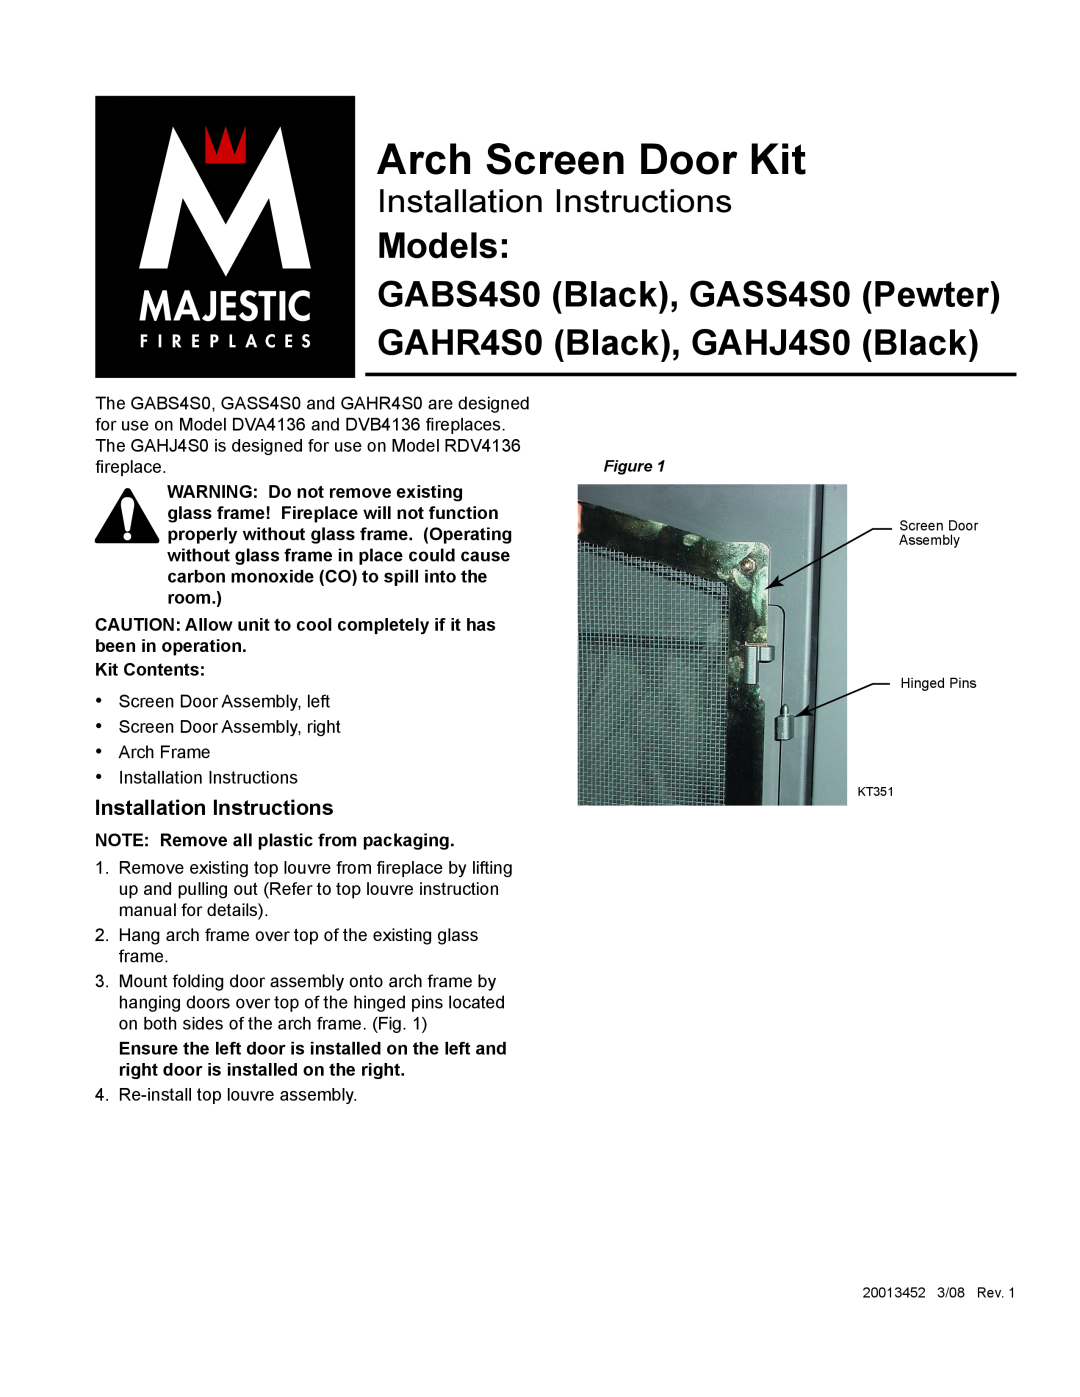 CFM Corporation GAHJ4S0, GAHR4S0 installation instructions Arch Screen Door Kit, Models GABS4S0 Black, GASS4S0 Pewter 